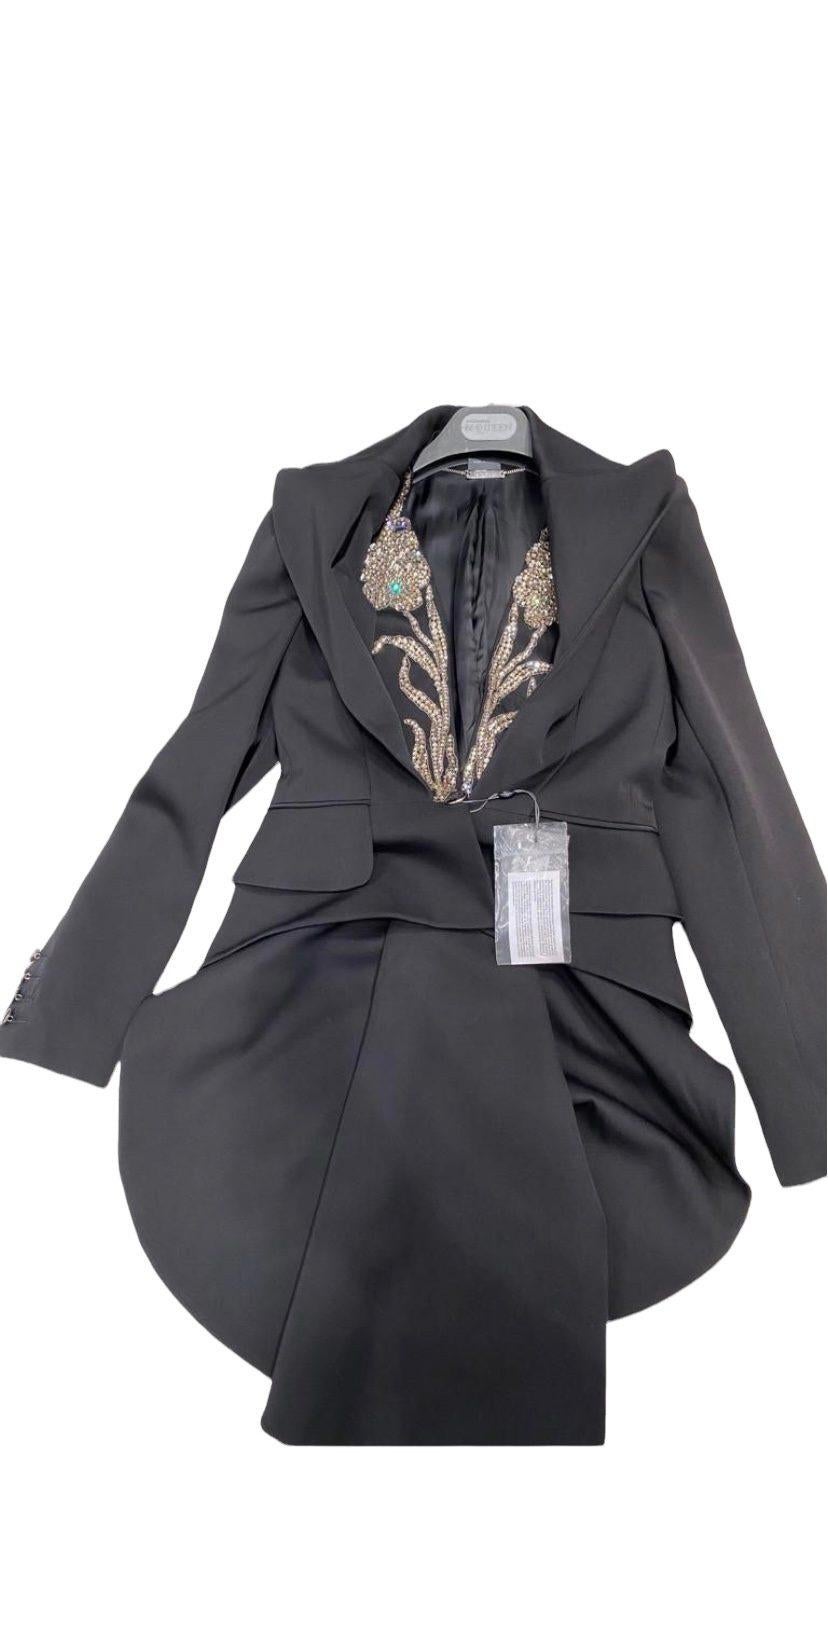 Women's or Men's New Alexander McQueen Black Crystal embellished blazer jacket 42 - 6